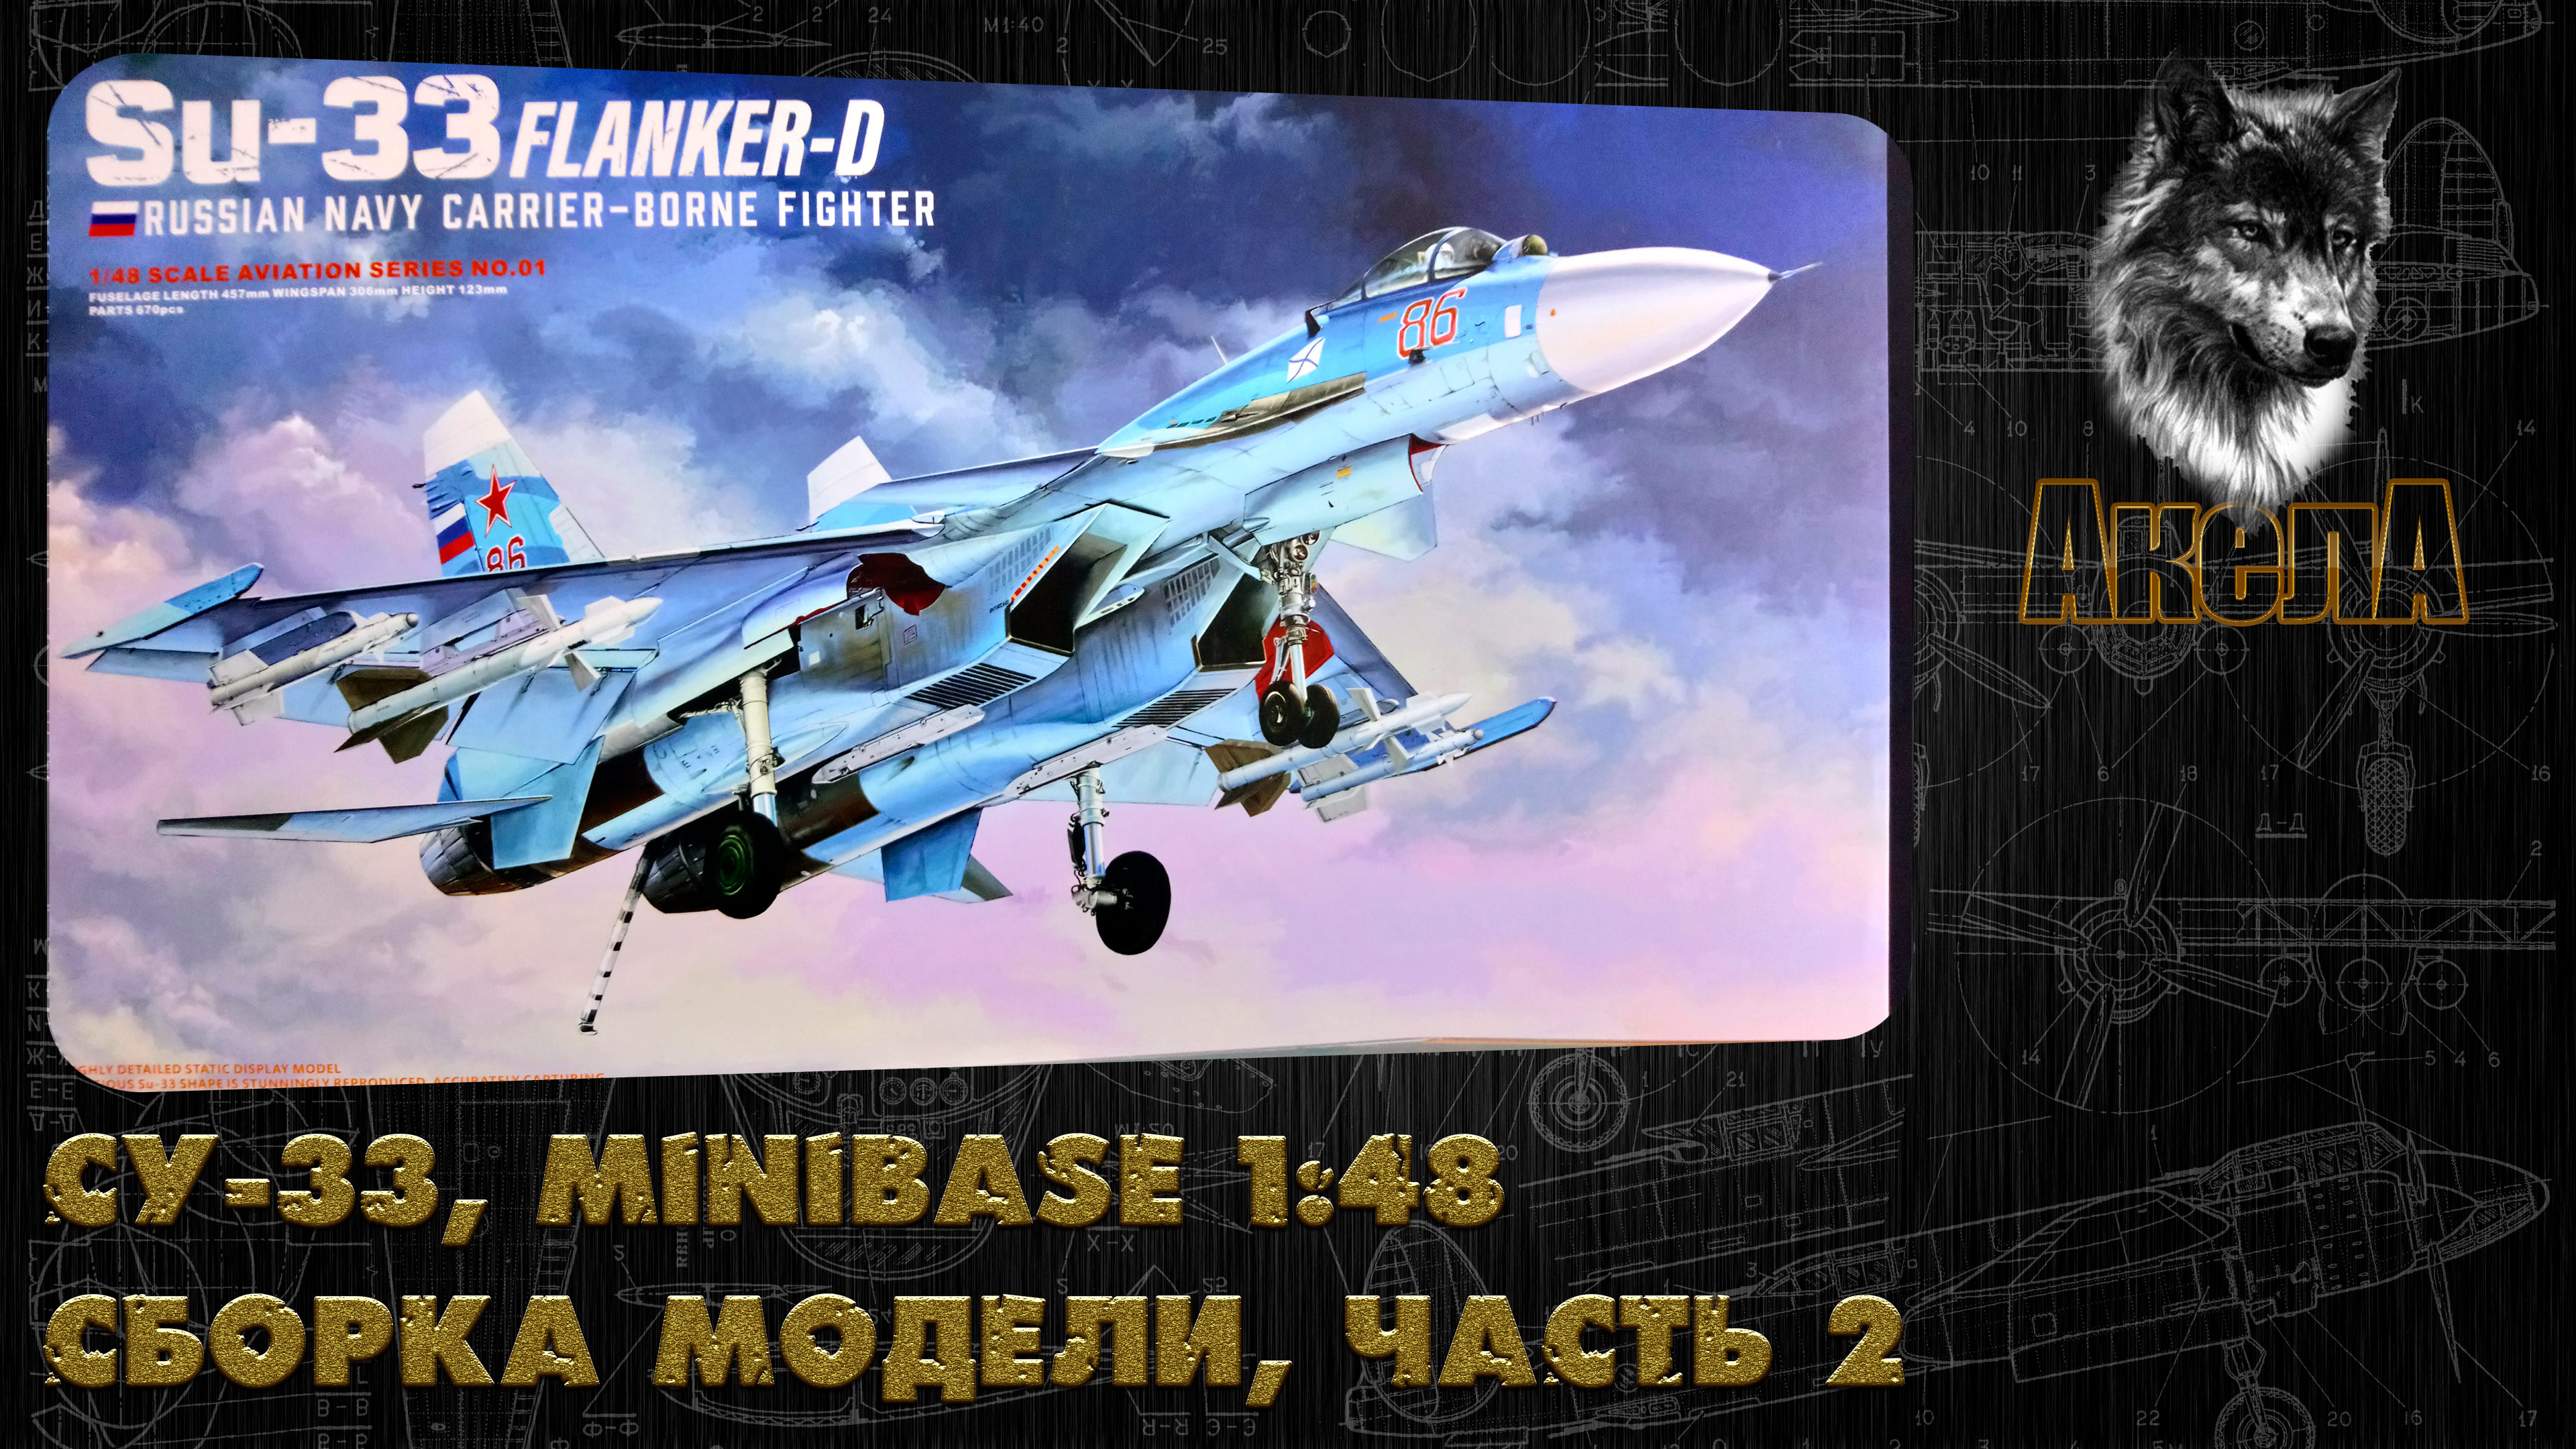 Су-33, Minibase 1/48, сборка модели, часть 2